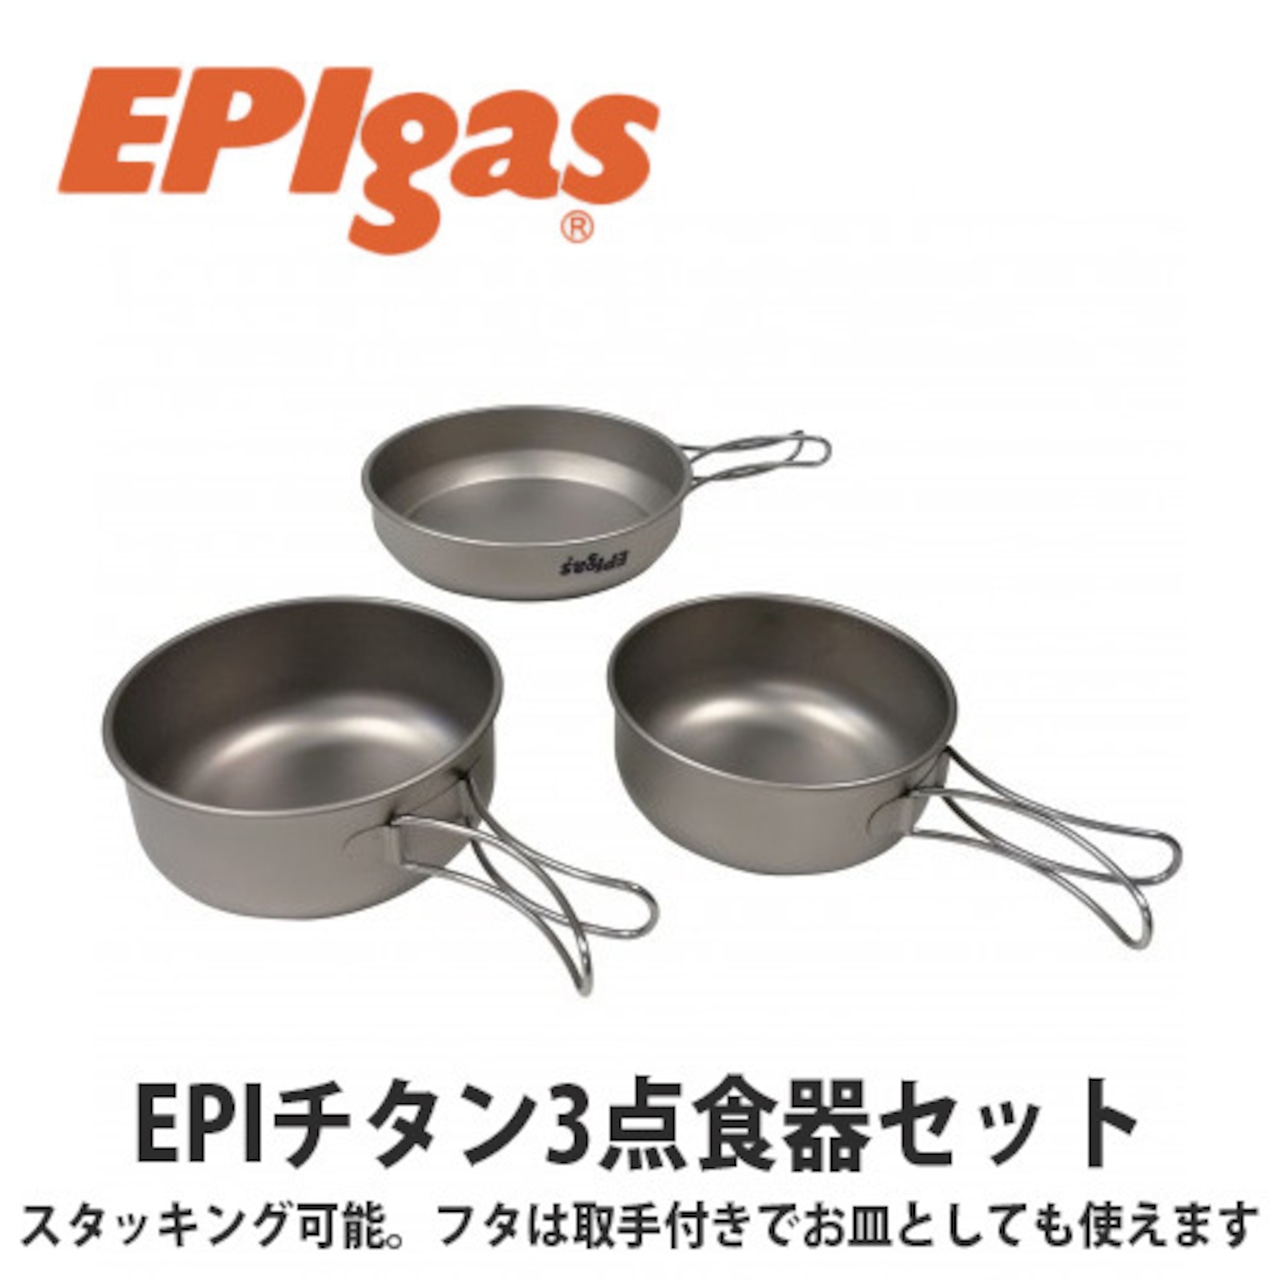 EPIgas(イーピーアイ ガス) EPIチタン 3点食器セット 軽量 高耐久性 携帯